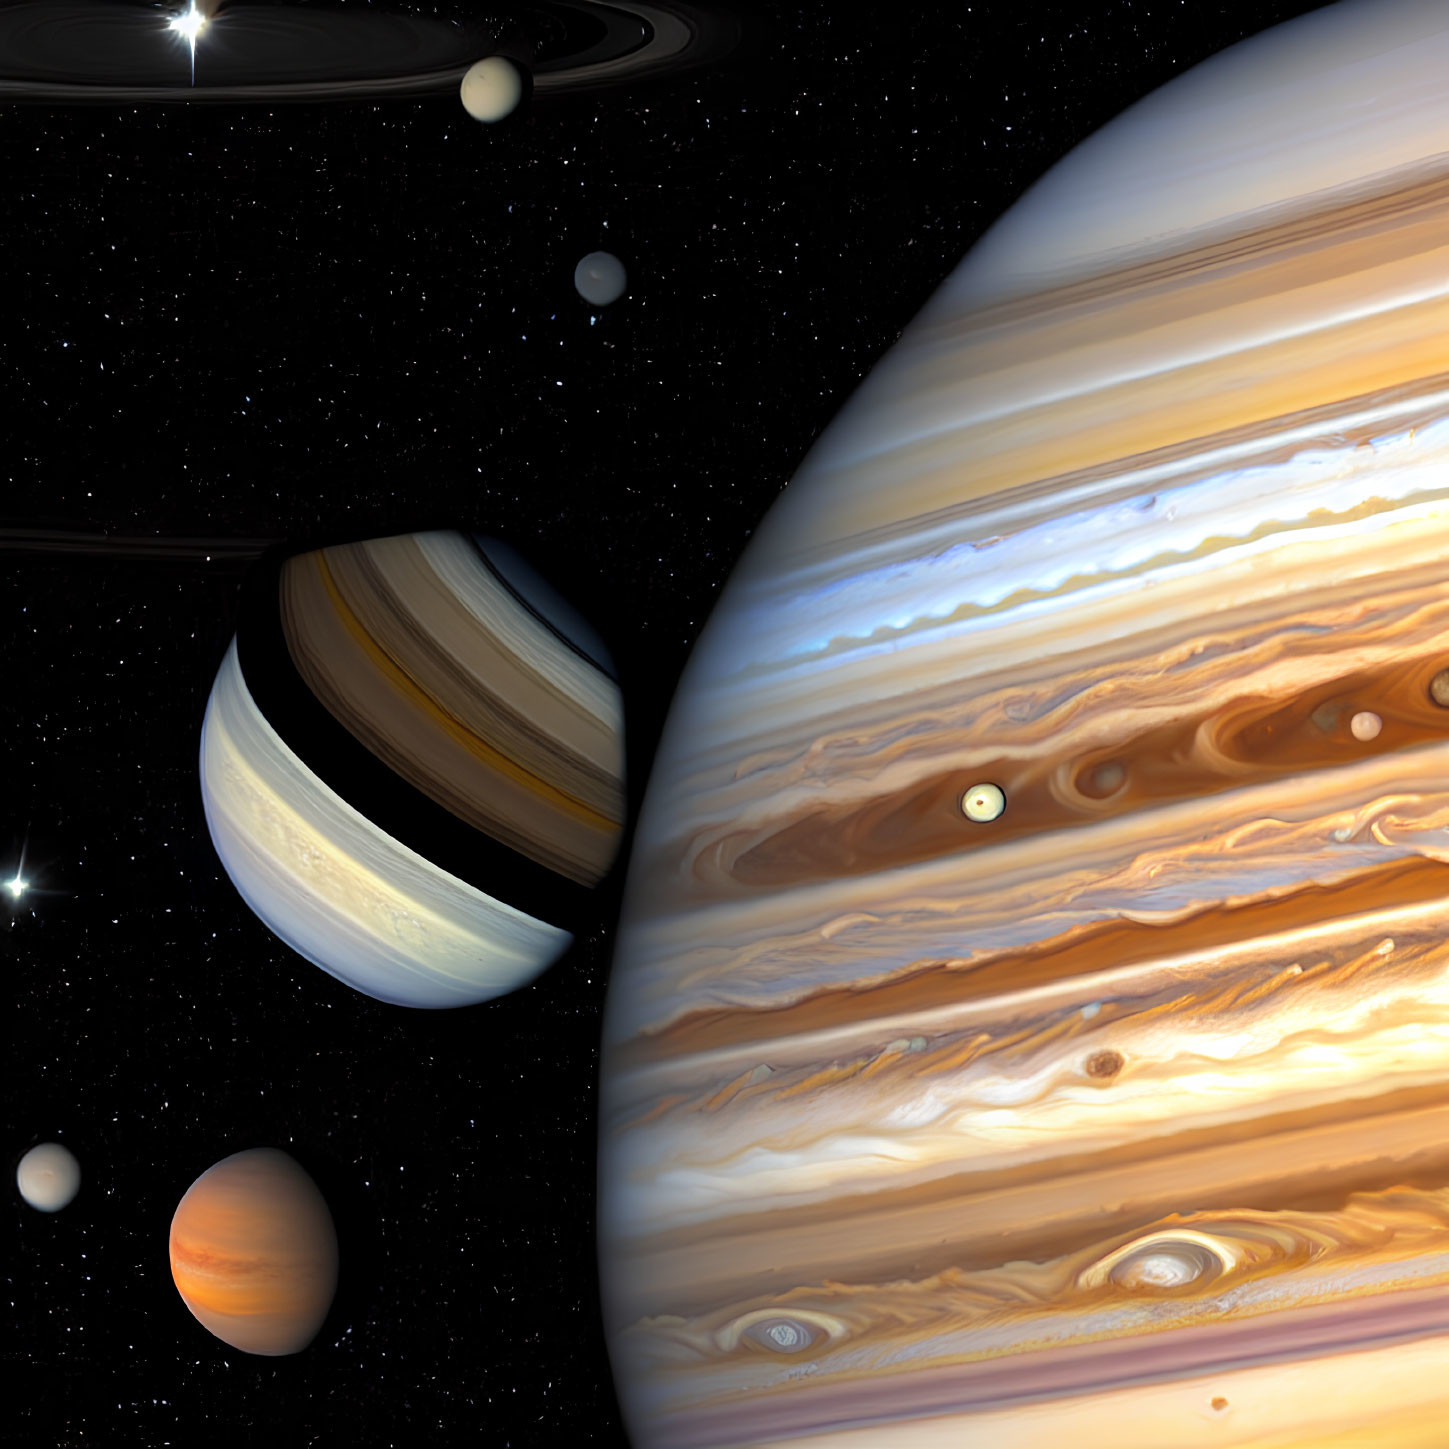 Detailed illustration of Jupiter's swirling atmosphere and moons against starry backdrop